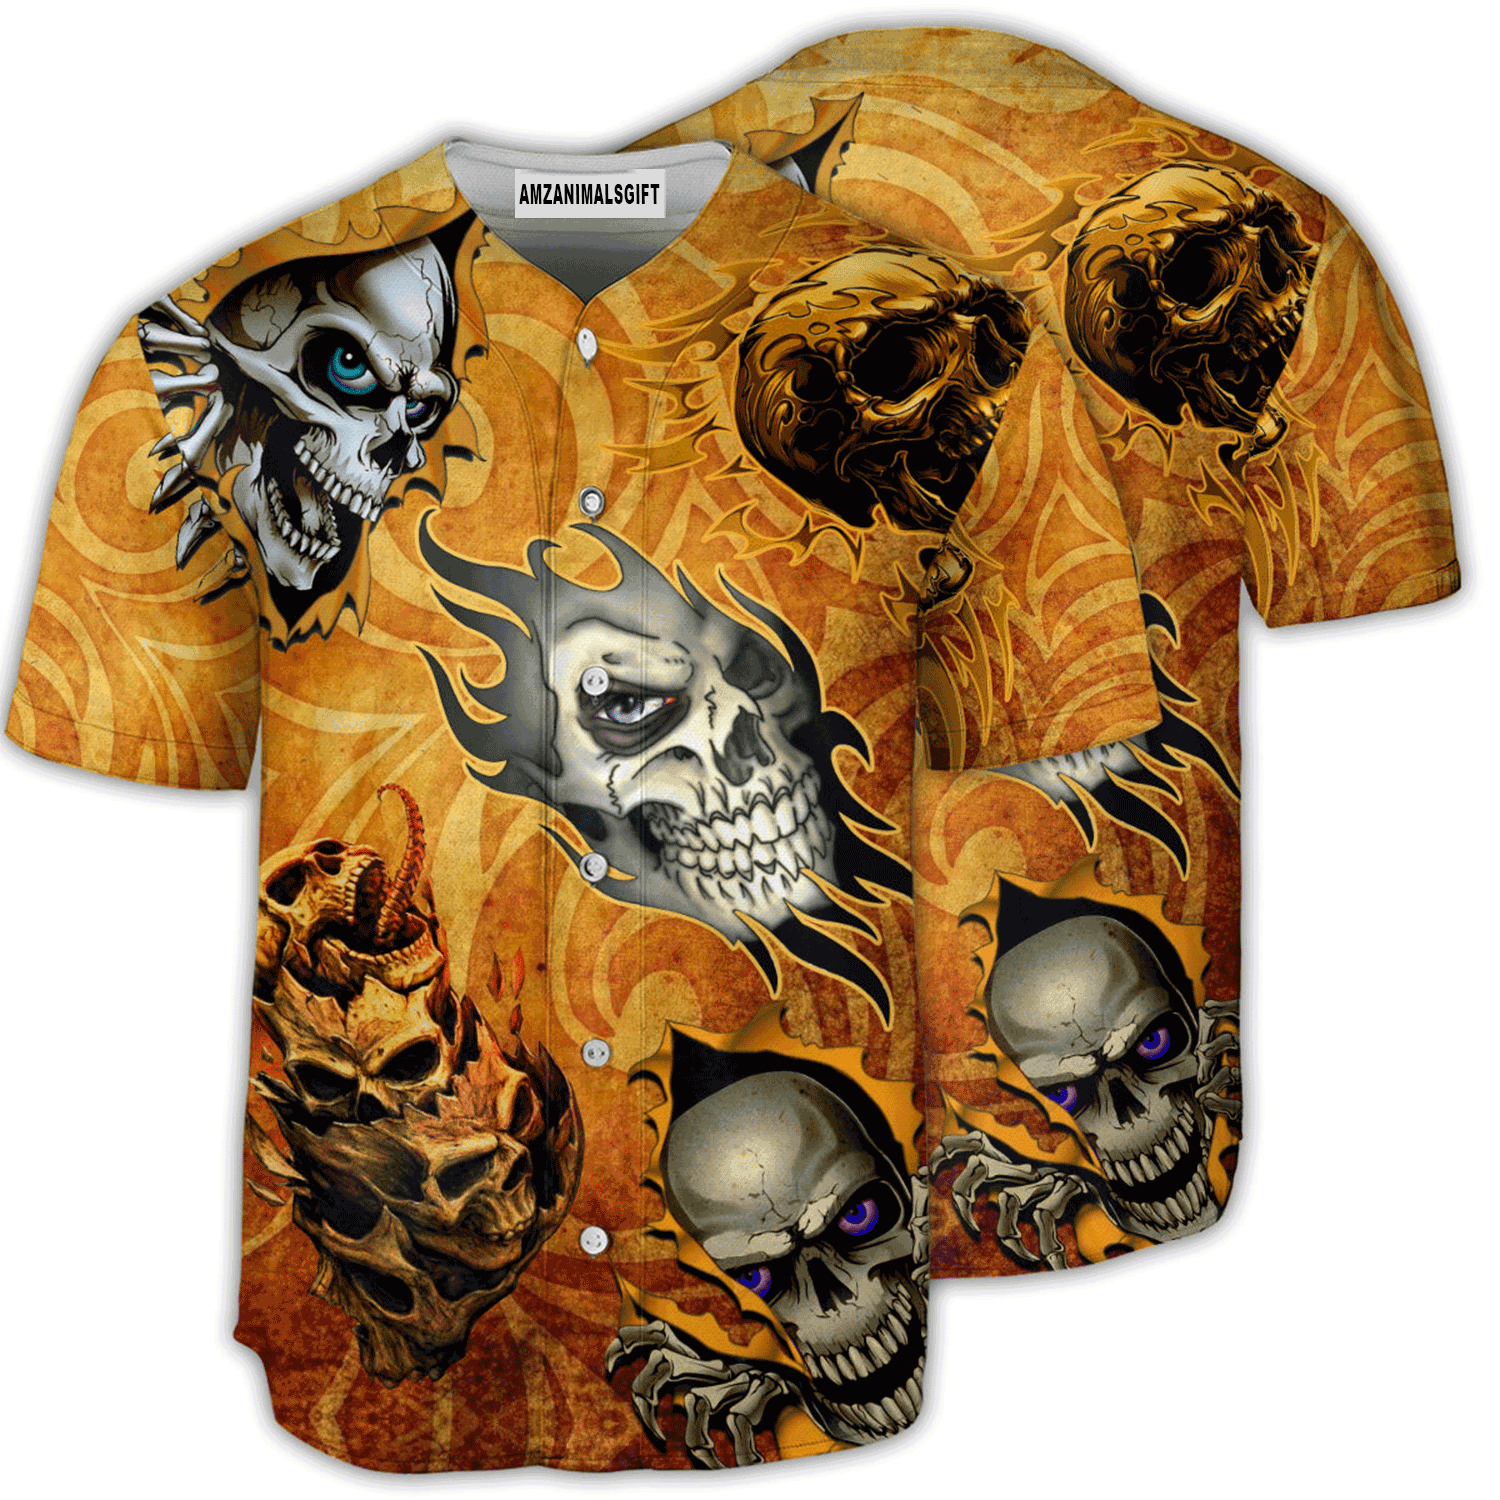 Skull Baseball Jersey Shirt - Skull And Fire My Style Baseball Jersey Shirt For Baseball Lover